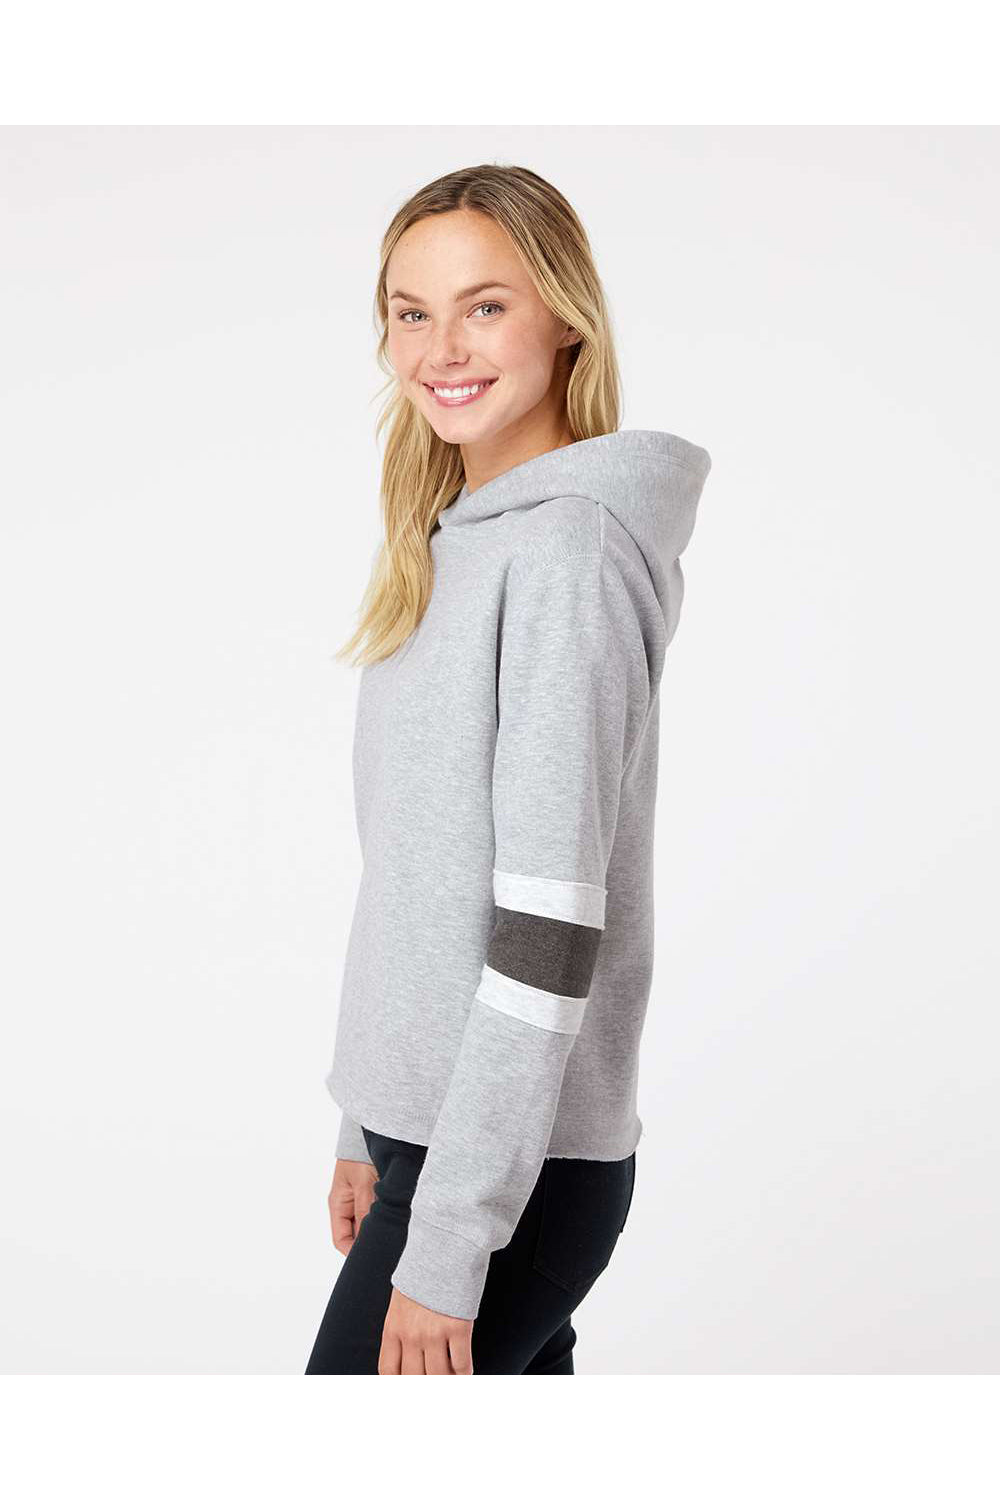 MV Sport W22135 Womens Sueded Fleece Thermal Lined Hooded Sweatshirt Hoodie Heather Grey/Ash Grey/Charcoal Grey Model Side